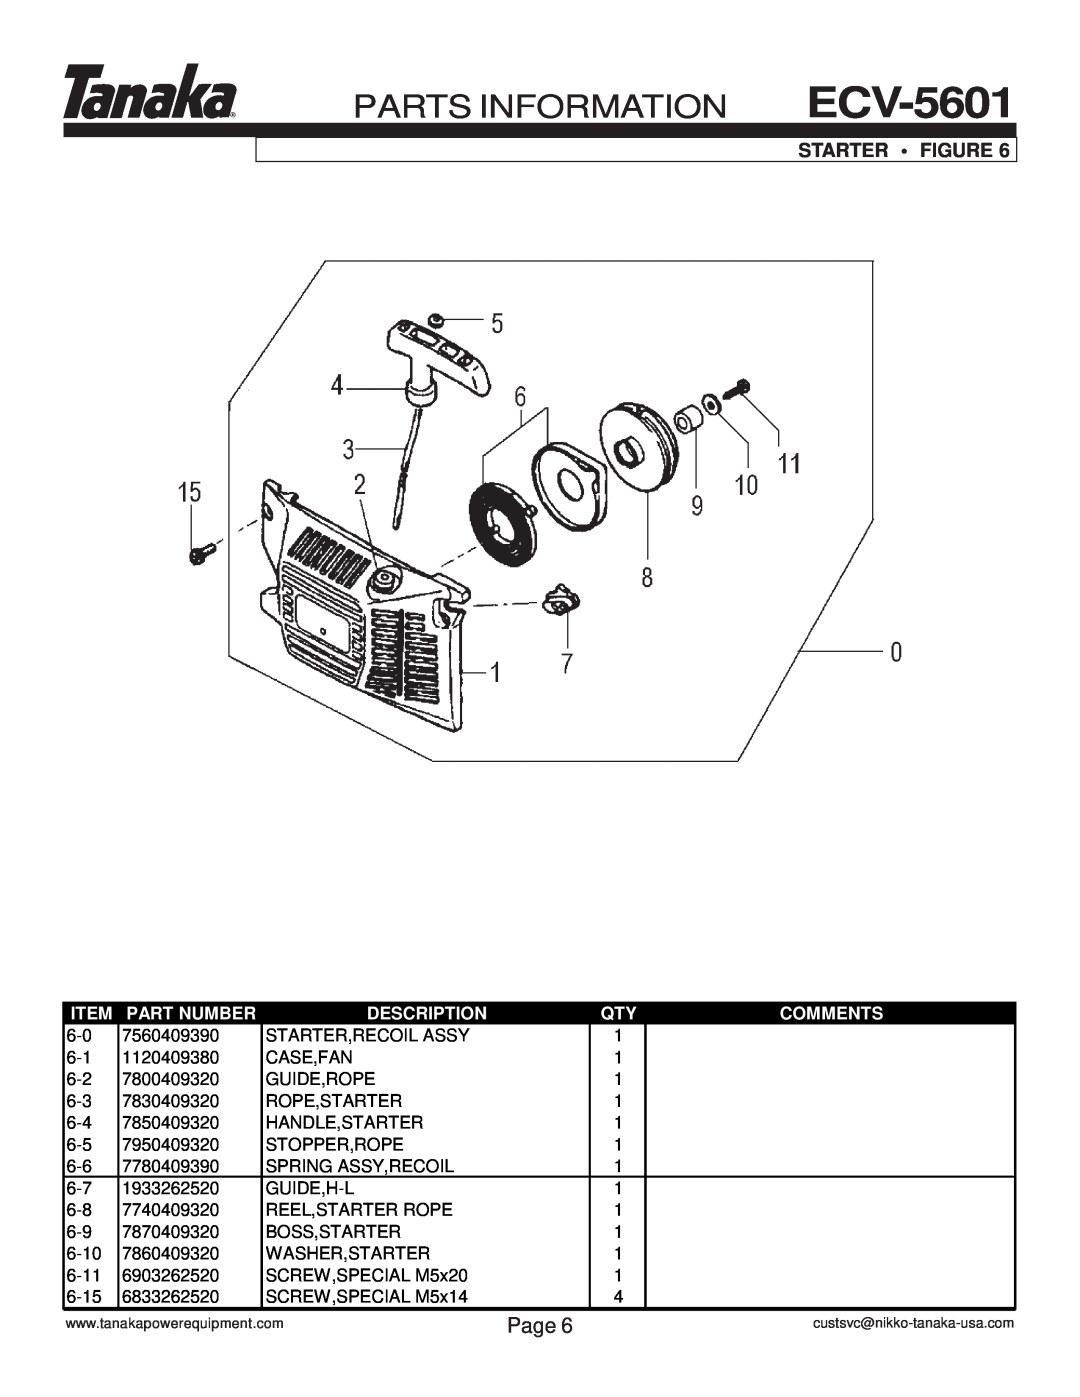 Tanaka ECV-5601 manual Parts Information, Starter Figure, Page, Part Number, Description, Comments 